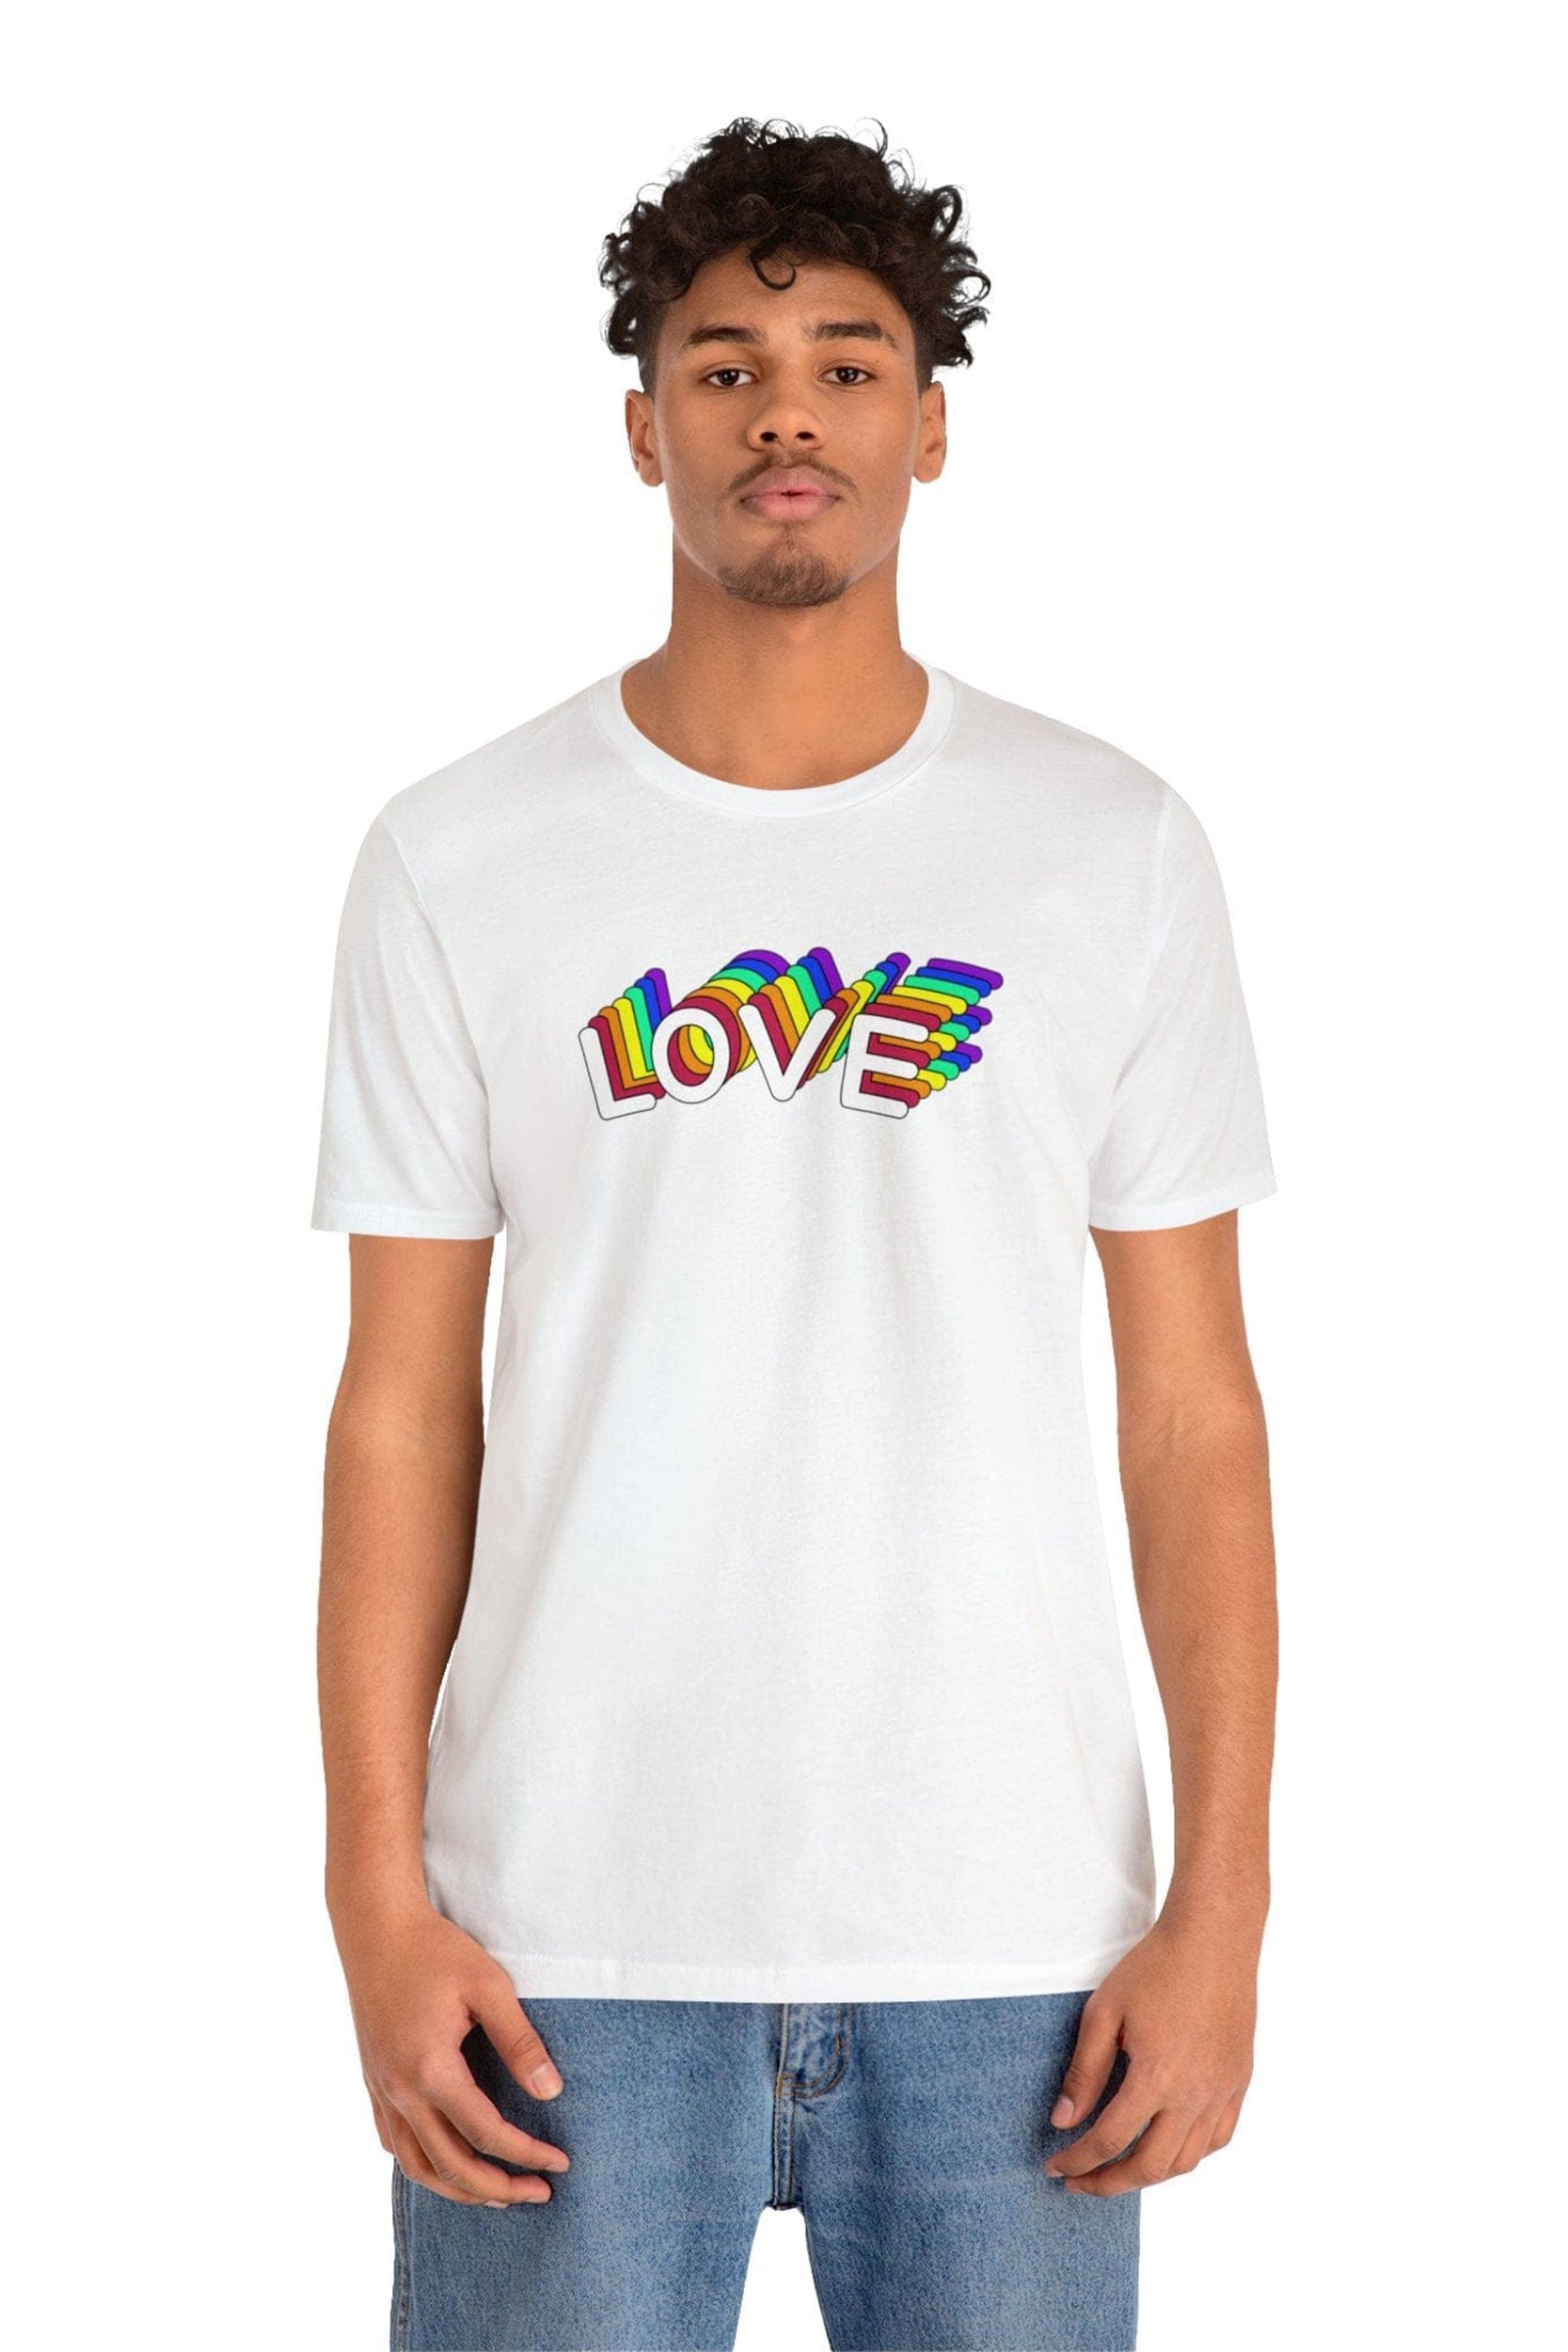 "LOVE" T-Shirt